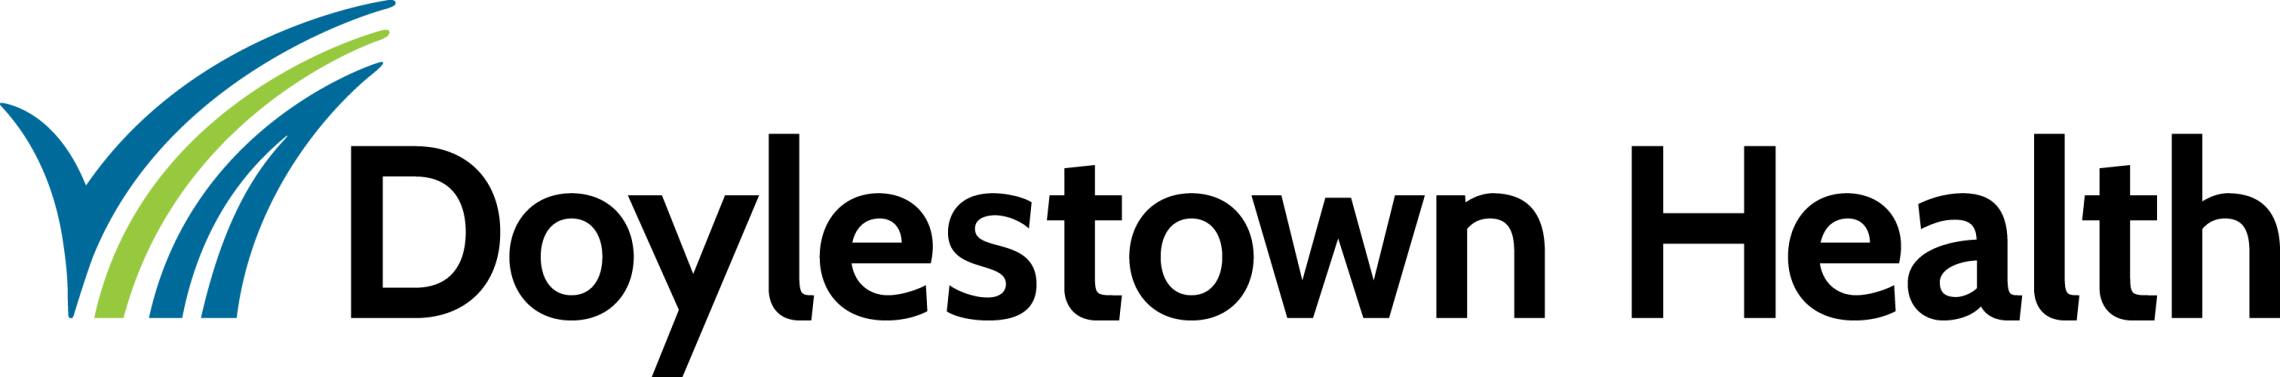 doylestown health logo